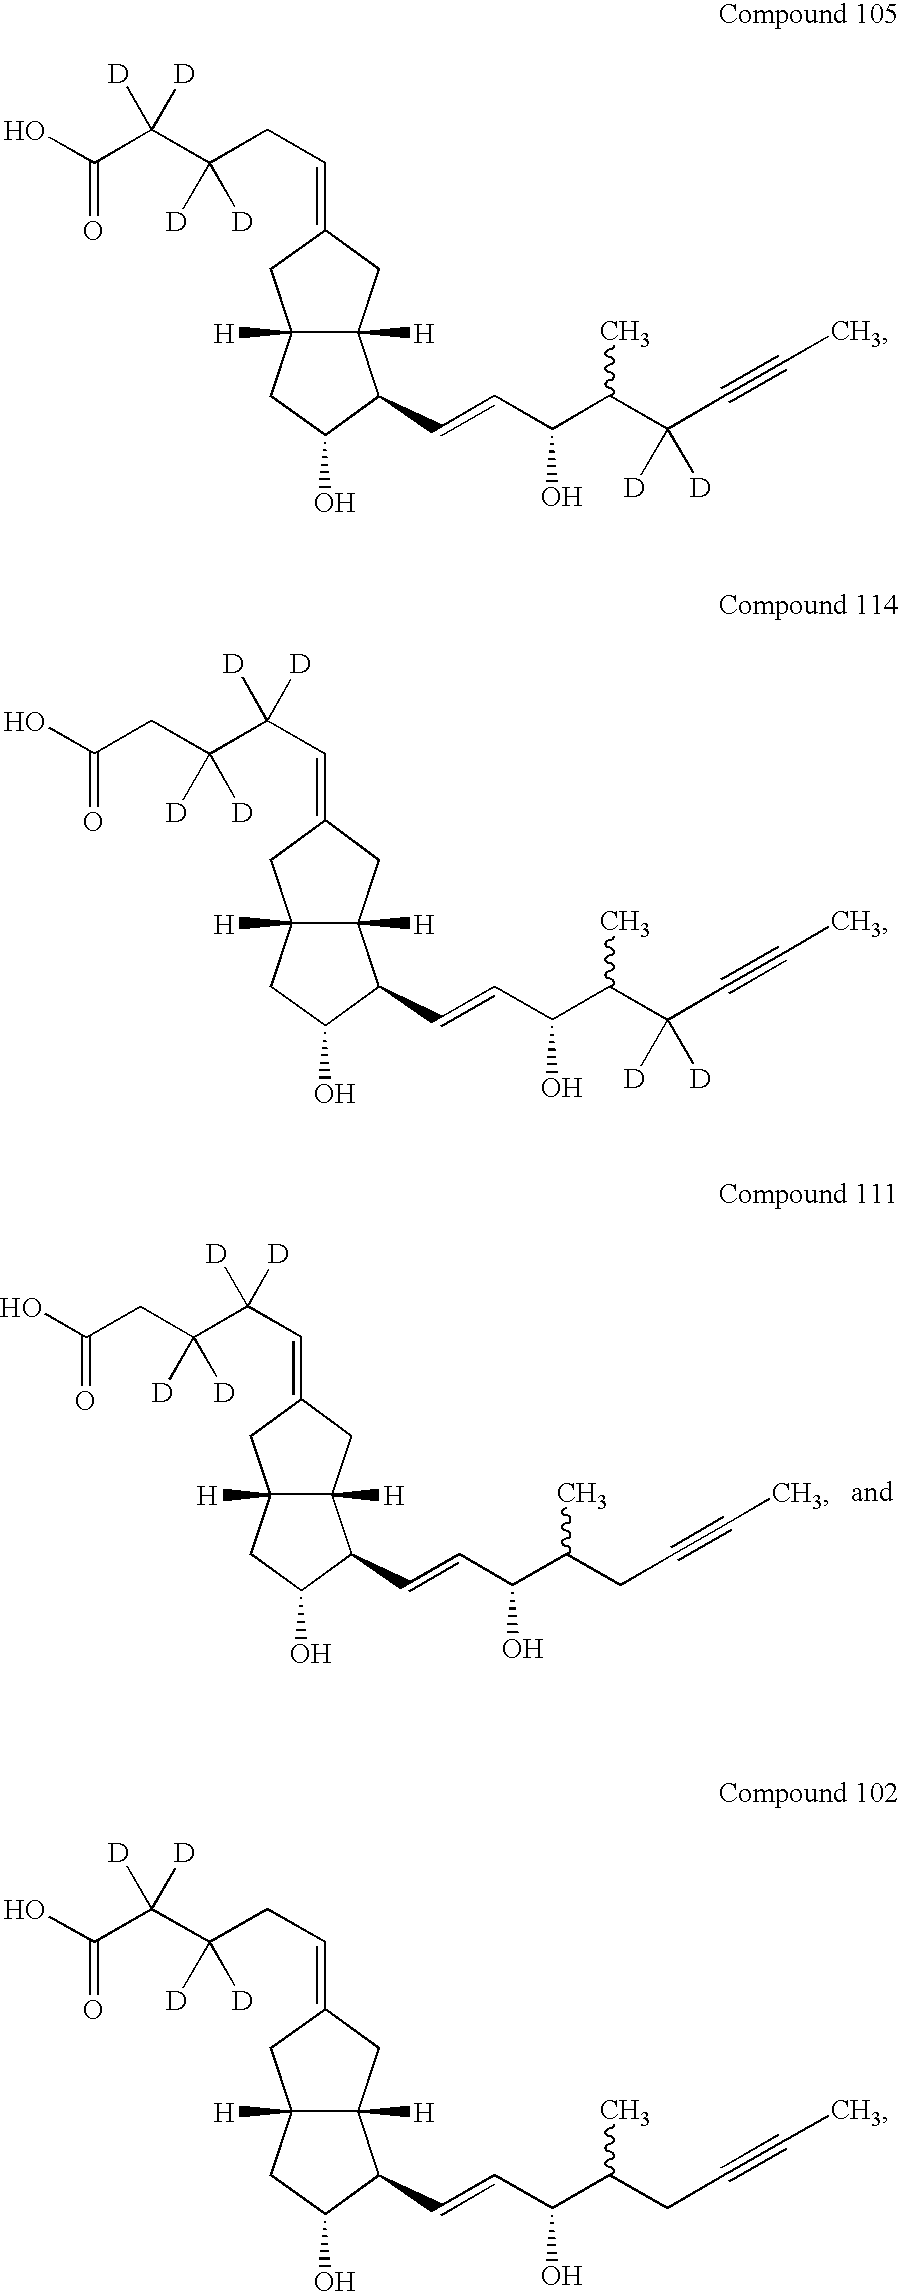 Prostacyclin derivatives